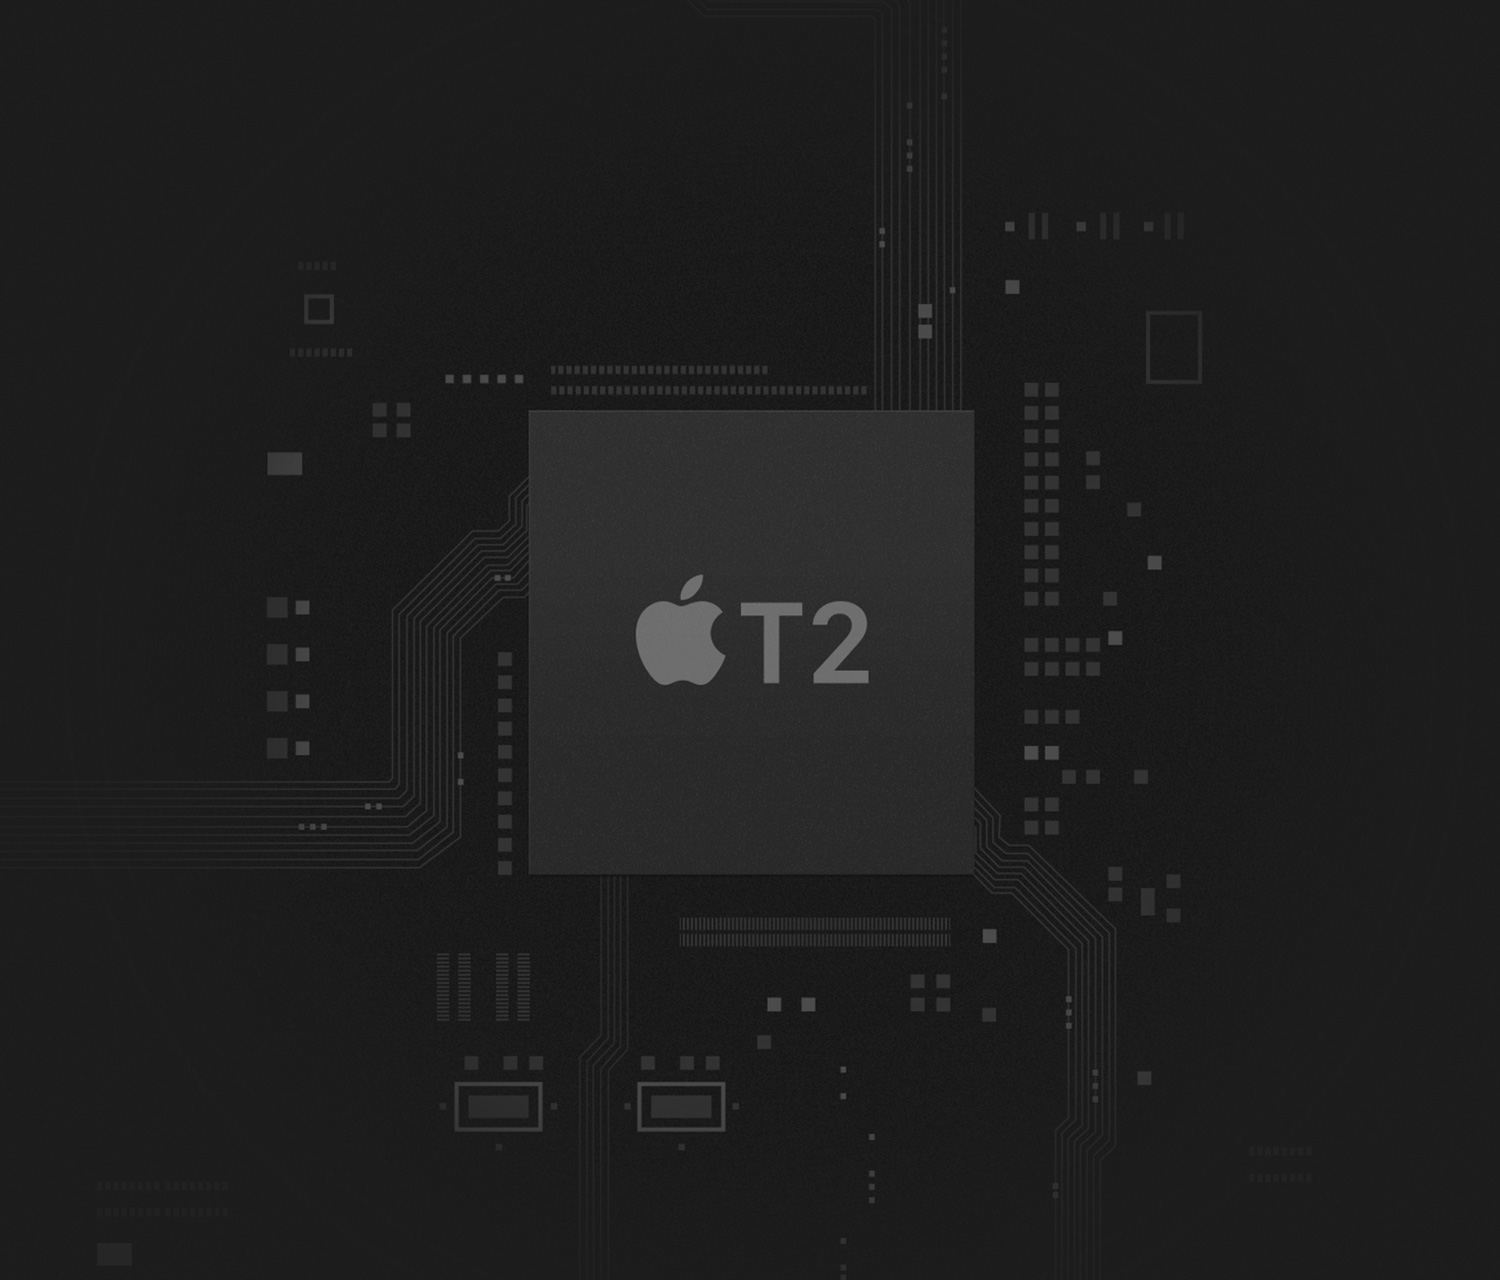 Apple Mac Pro security T2 chip